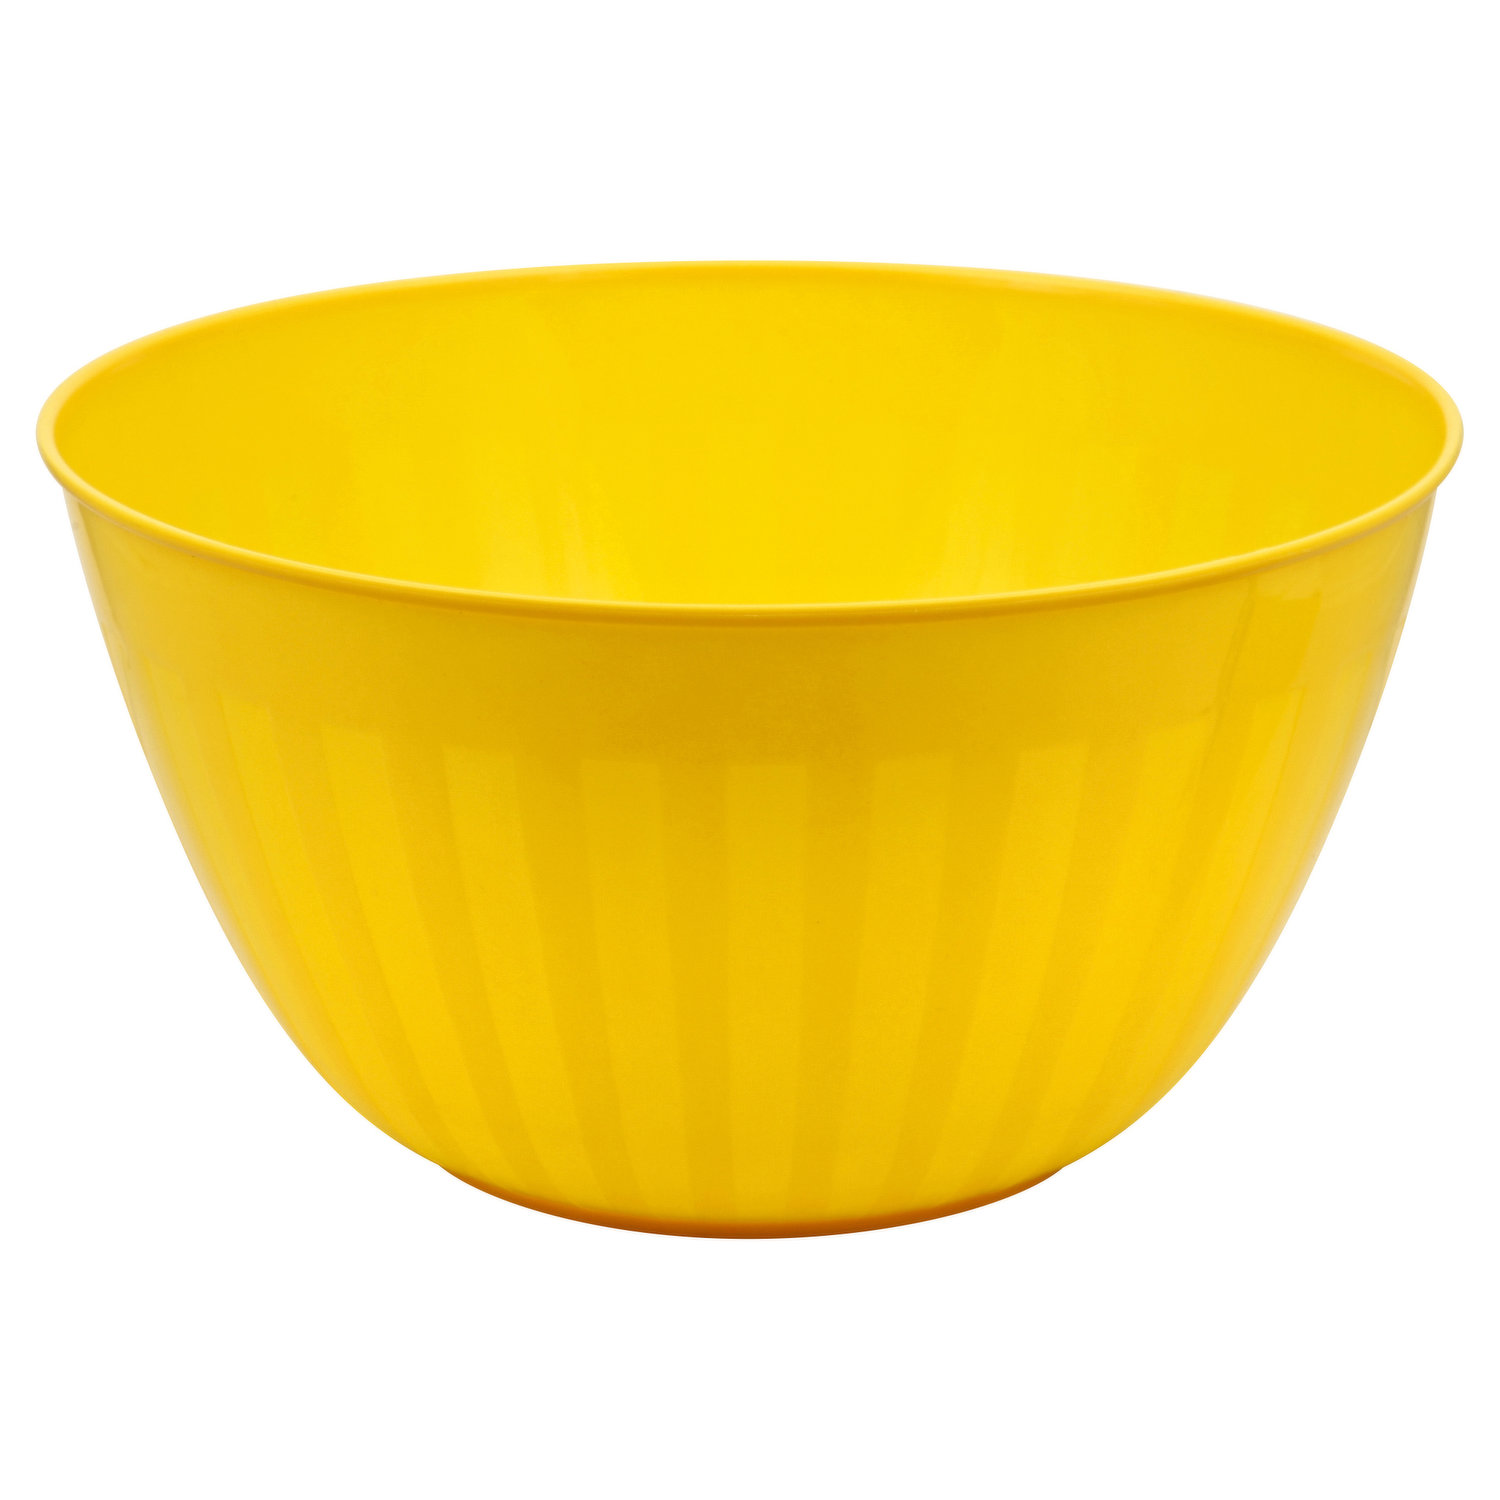 Large Plastic Bowl With Lid 5 Quart